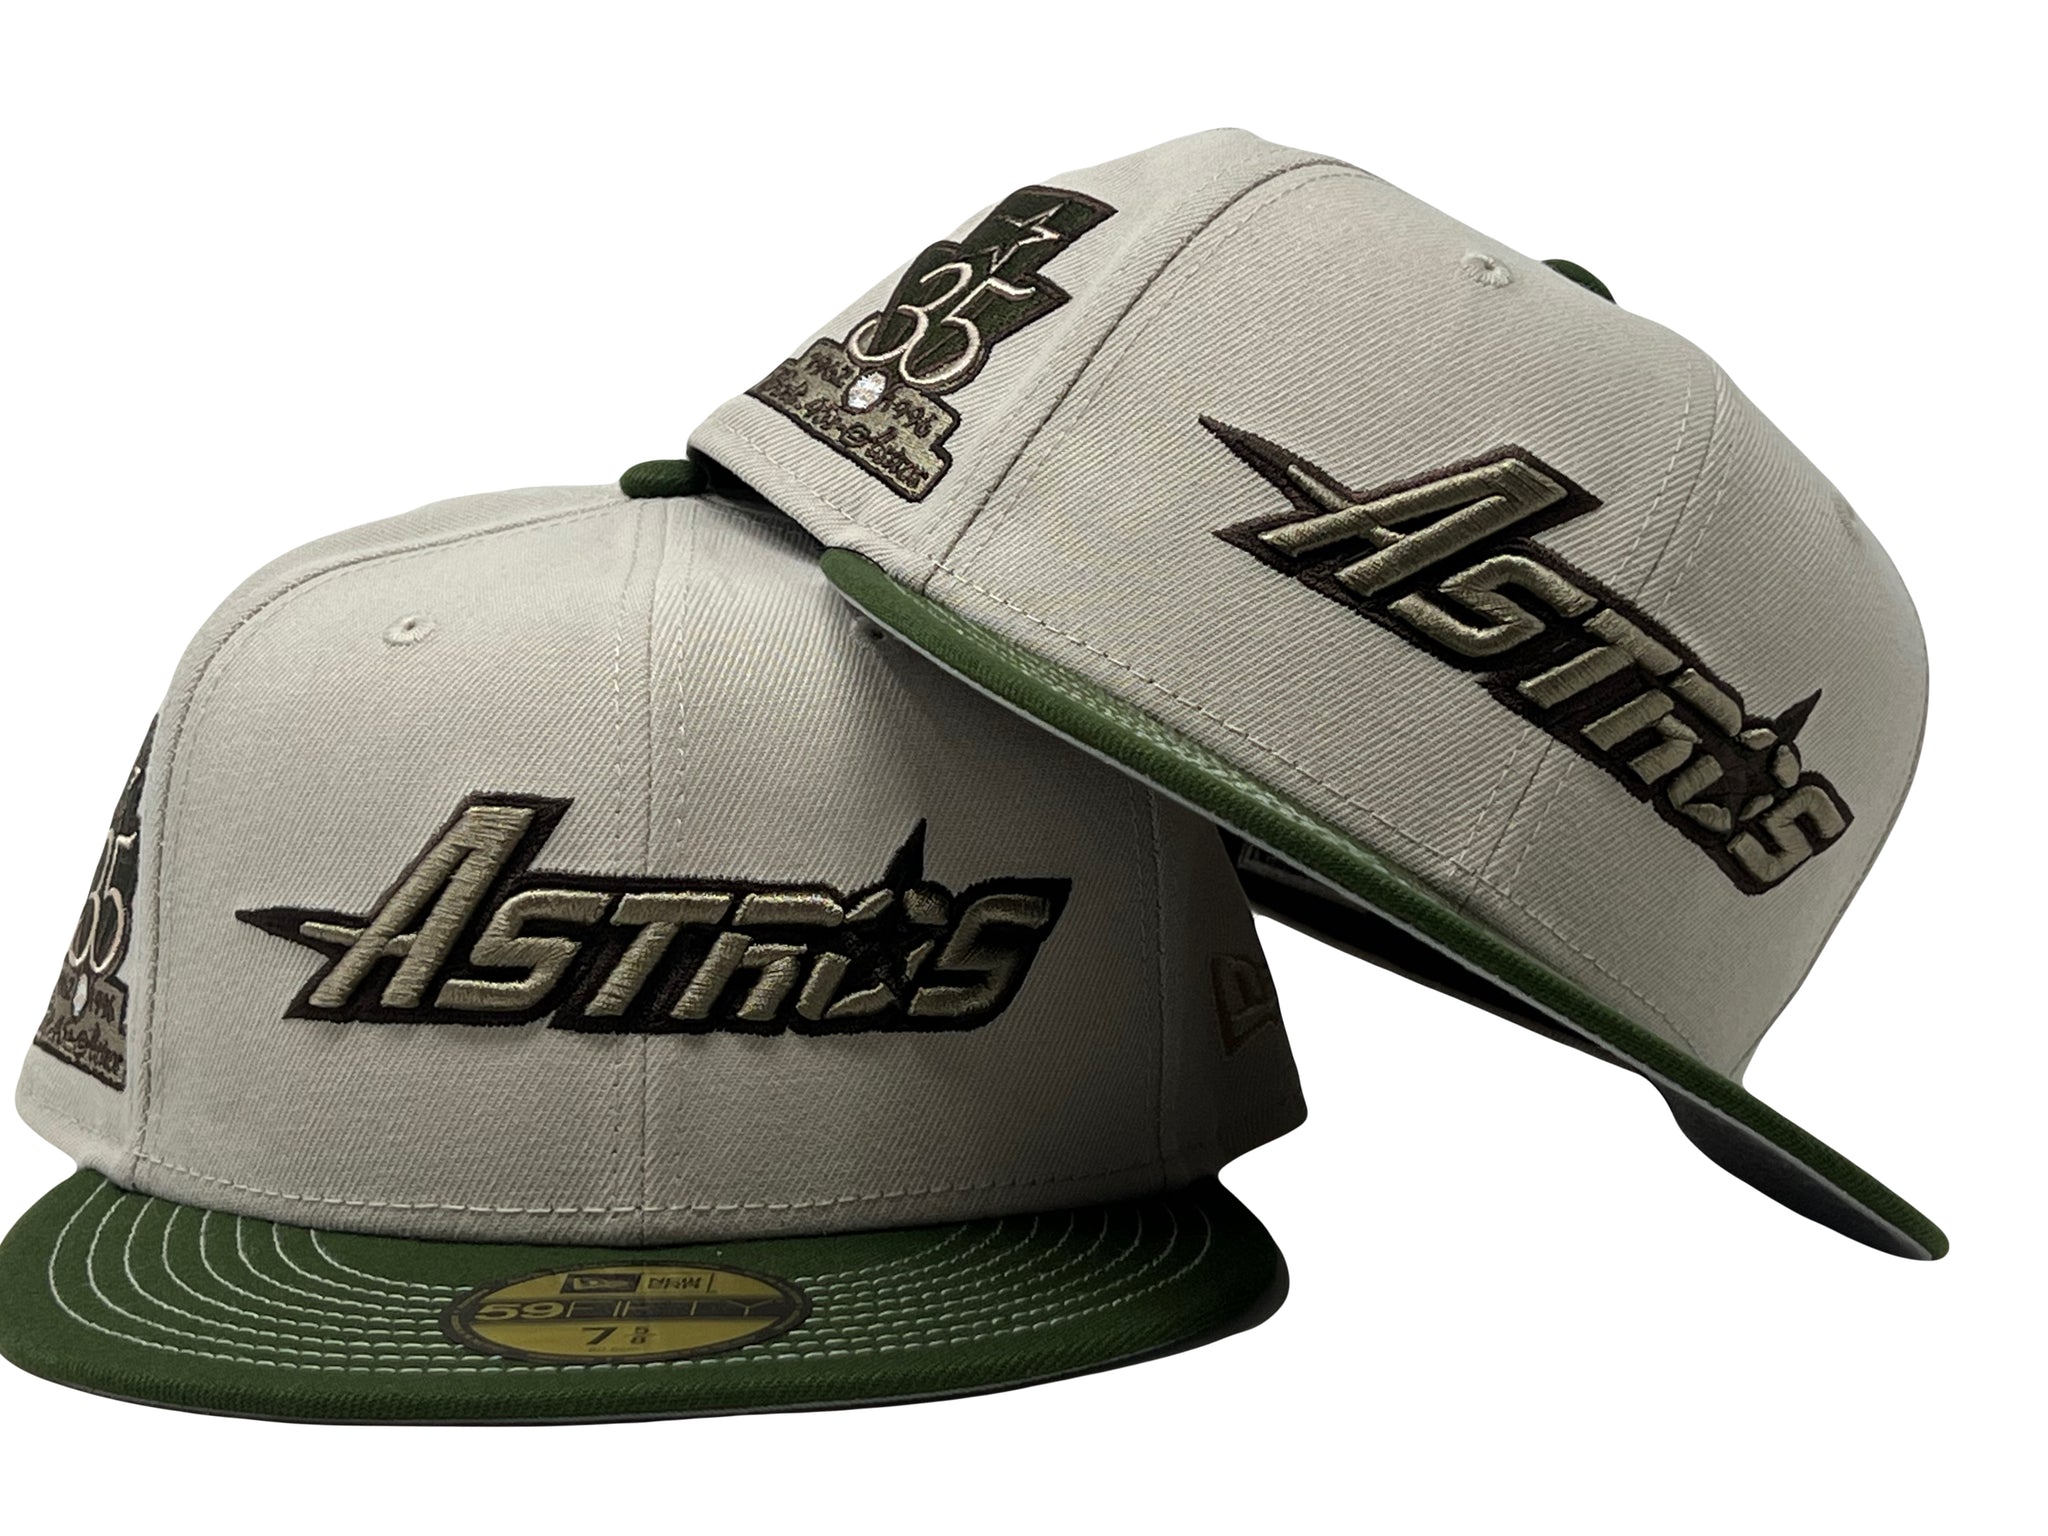 Houston Astros Stitch custom Personalized Baseball Jersey -   Worldwide Shipping